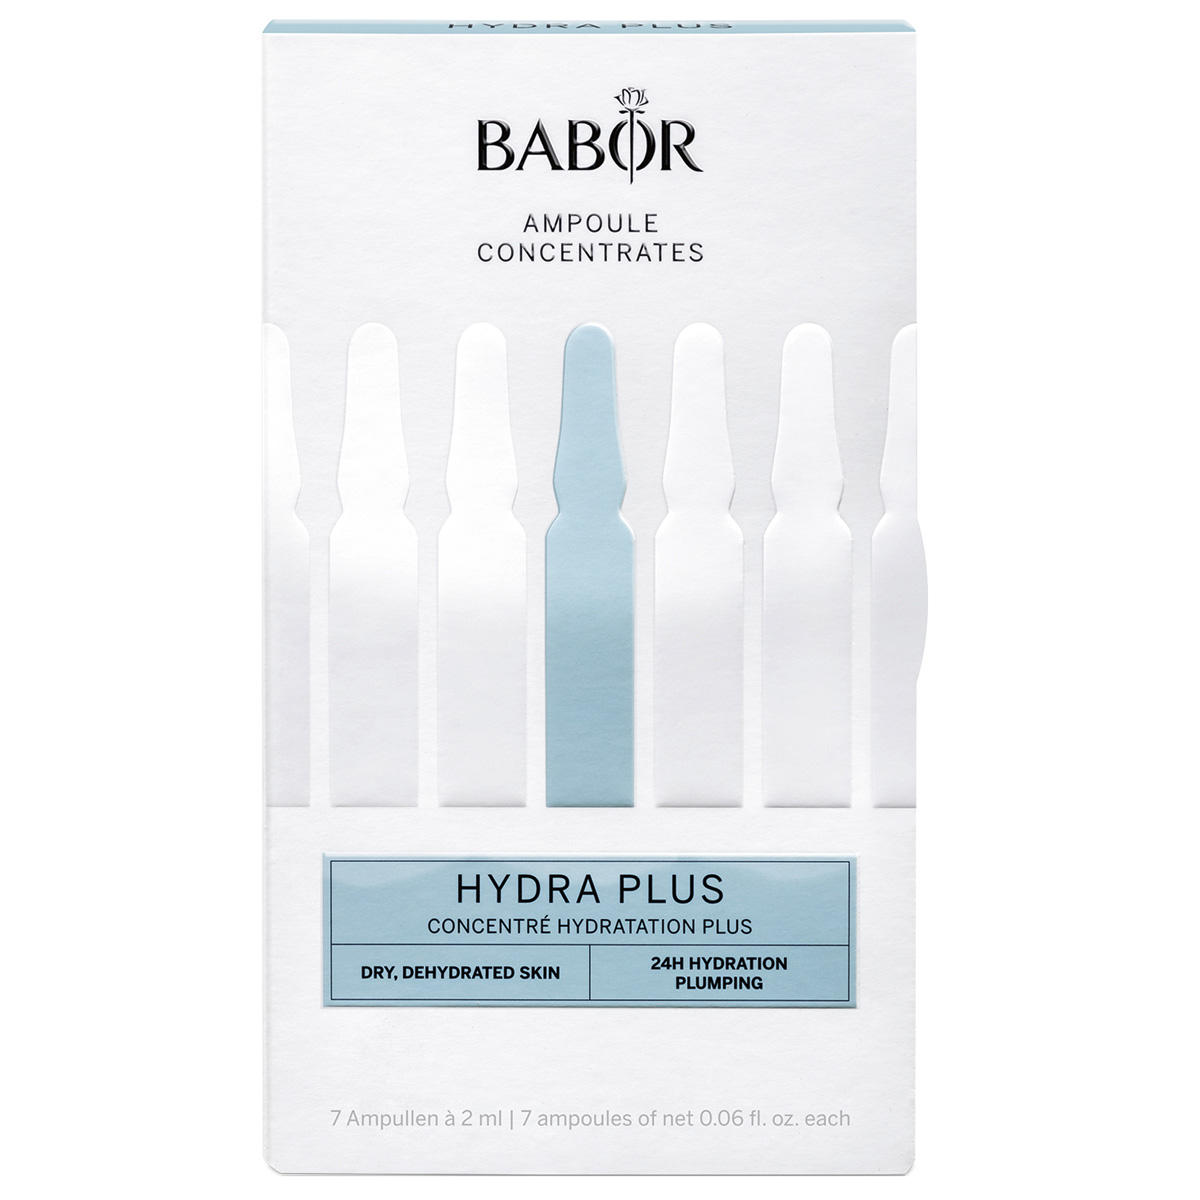 BABOR AMPOULE CONCENTRATES Hydra Plus 7 x 2 ml - 1